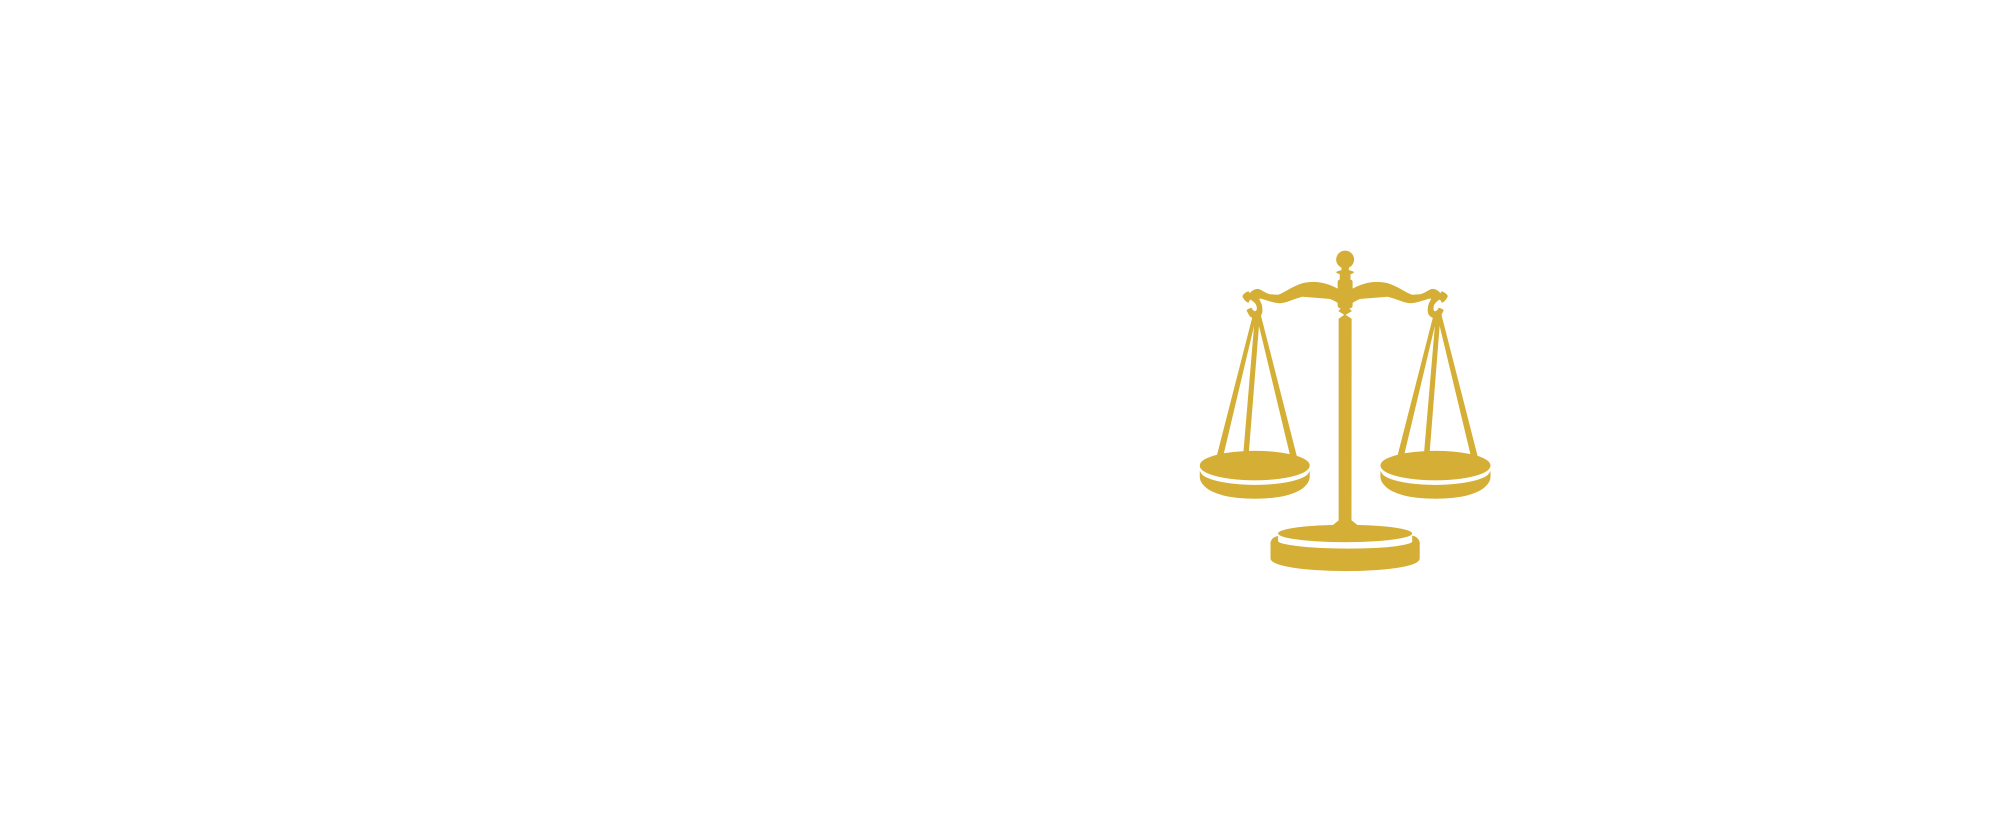 Law Office of Maria T Patente PLLC transparent